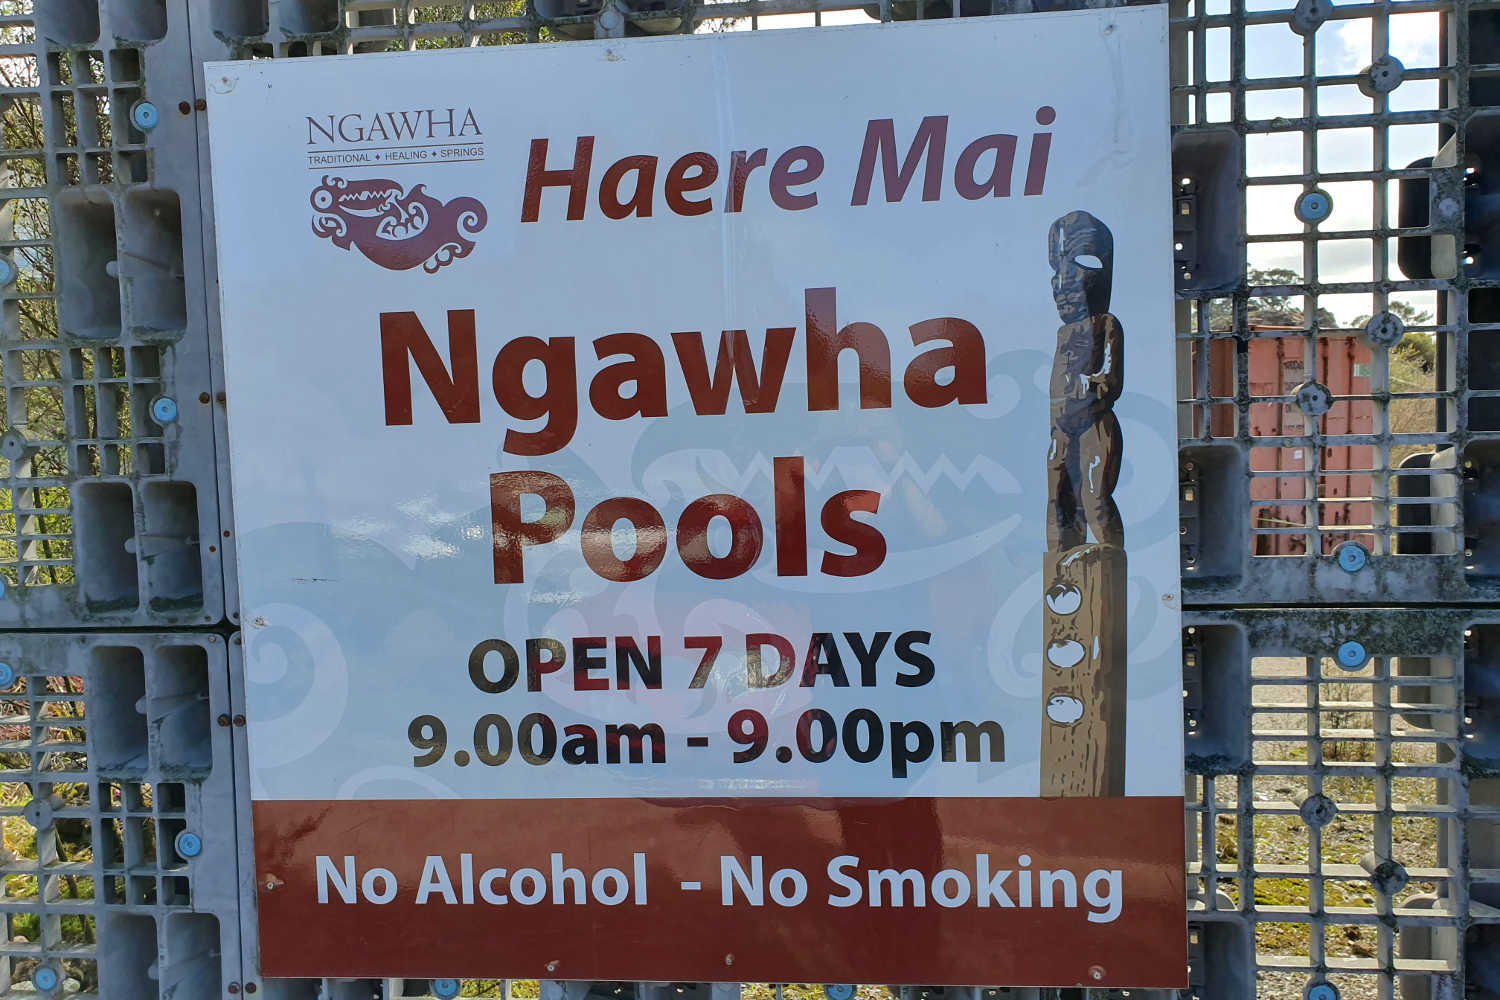 Ngawha Hot Pools signage on pallet fencing